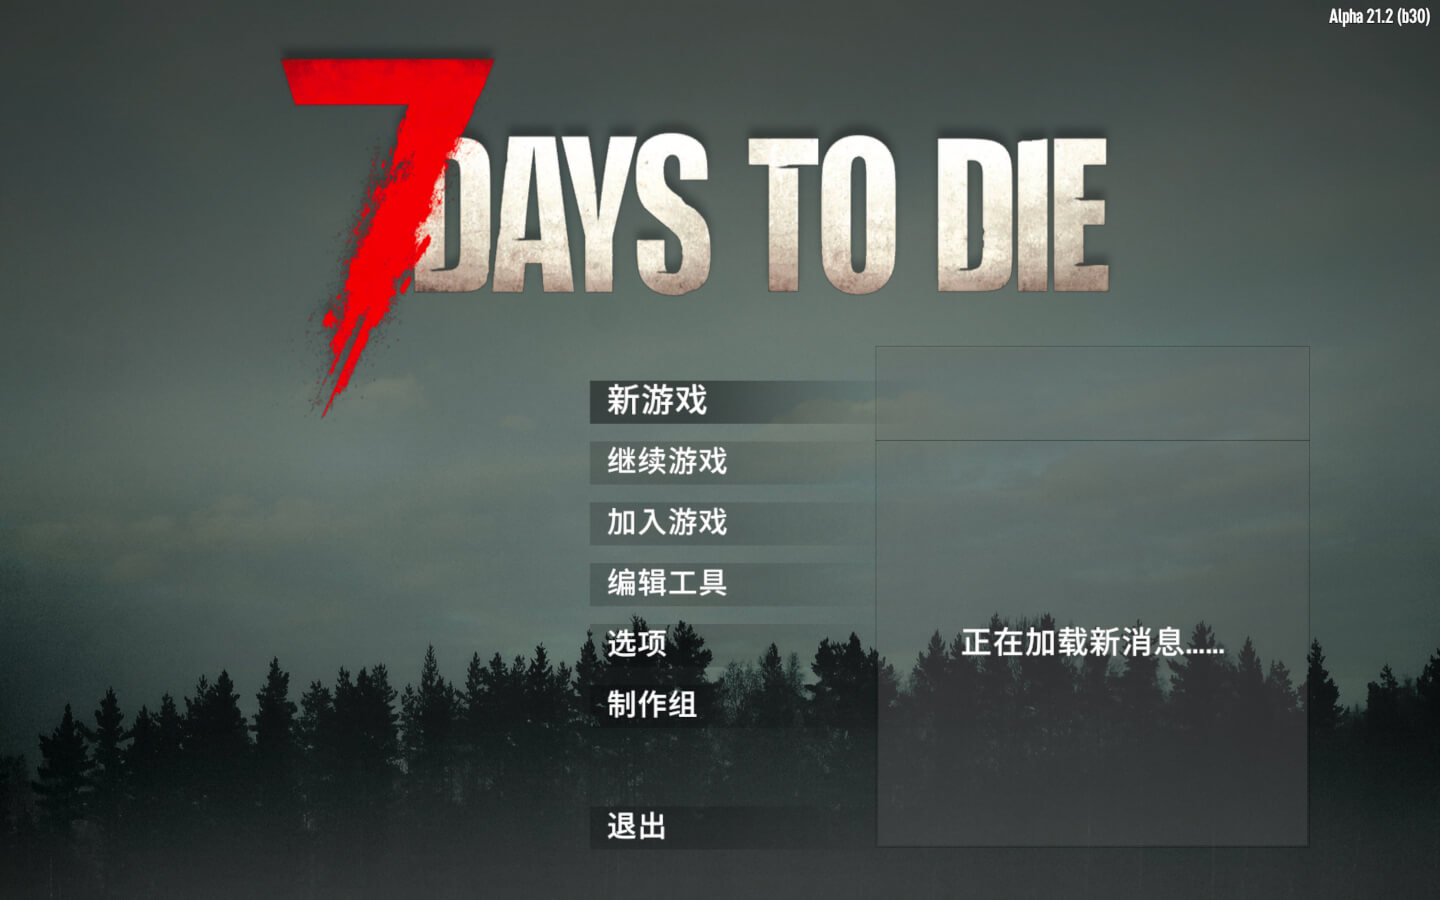 七日杀 7 Days to Die for Mac v21.2 (b30) 中文原生版-1